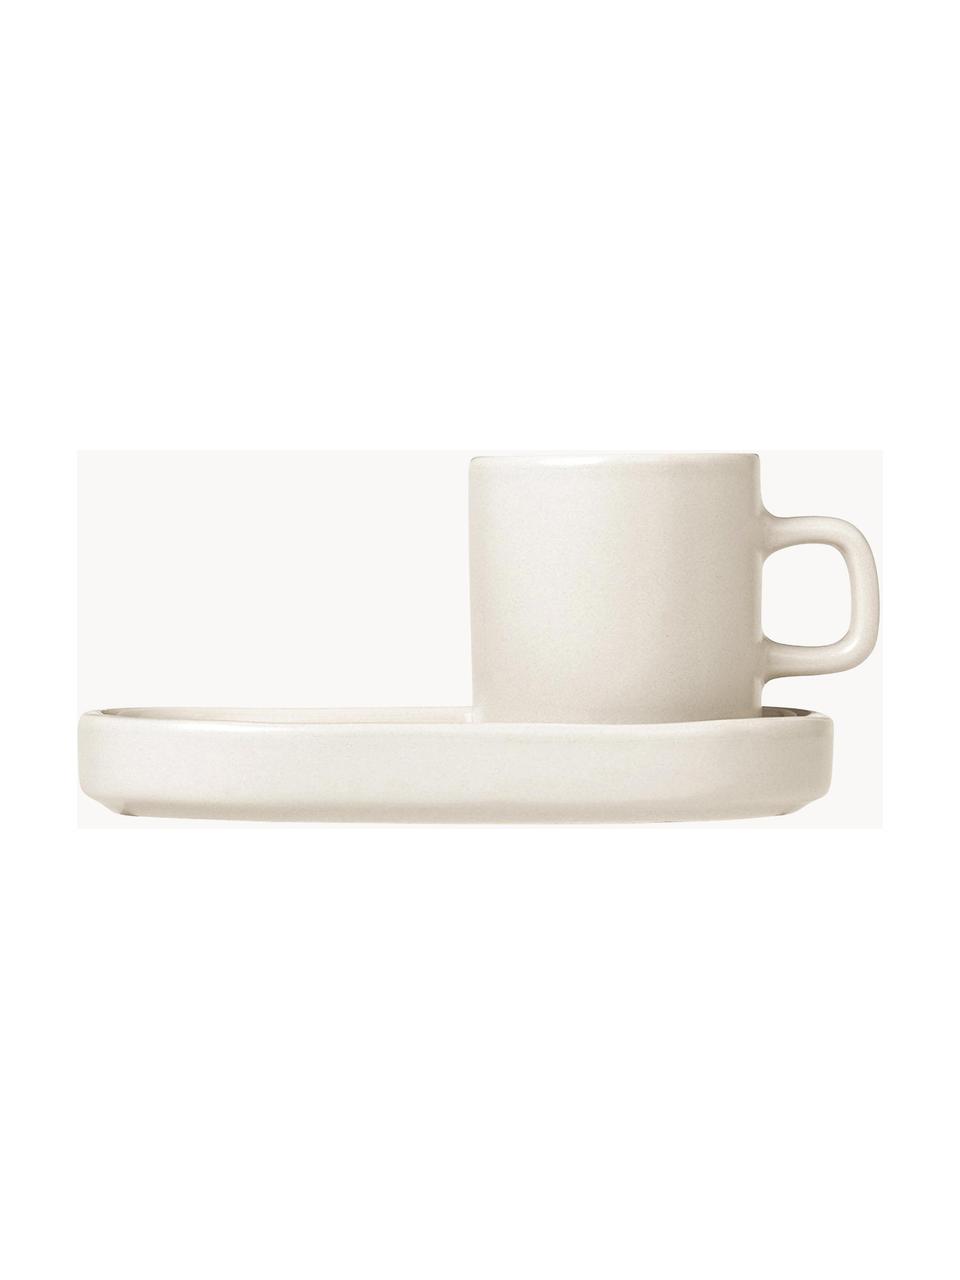 Tazzina con piattino opaca/lucida Pilar 2 pz, Ceramica, Bianco crema, Ø 5 x Alt. 6 cm, 50 ml